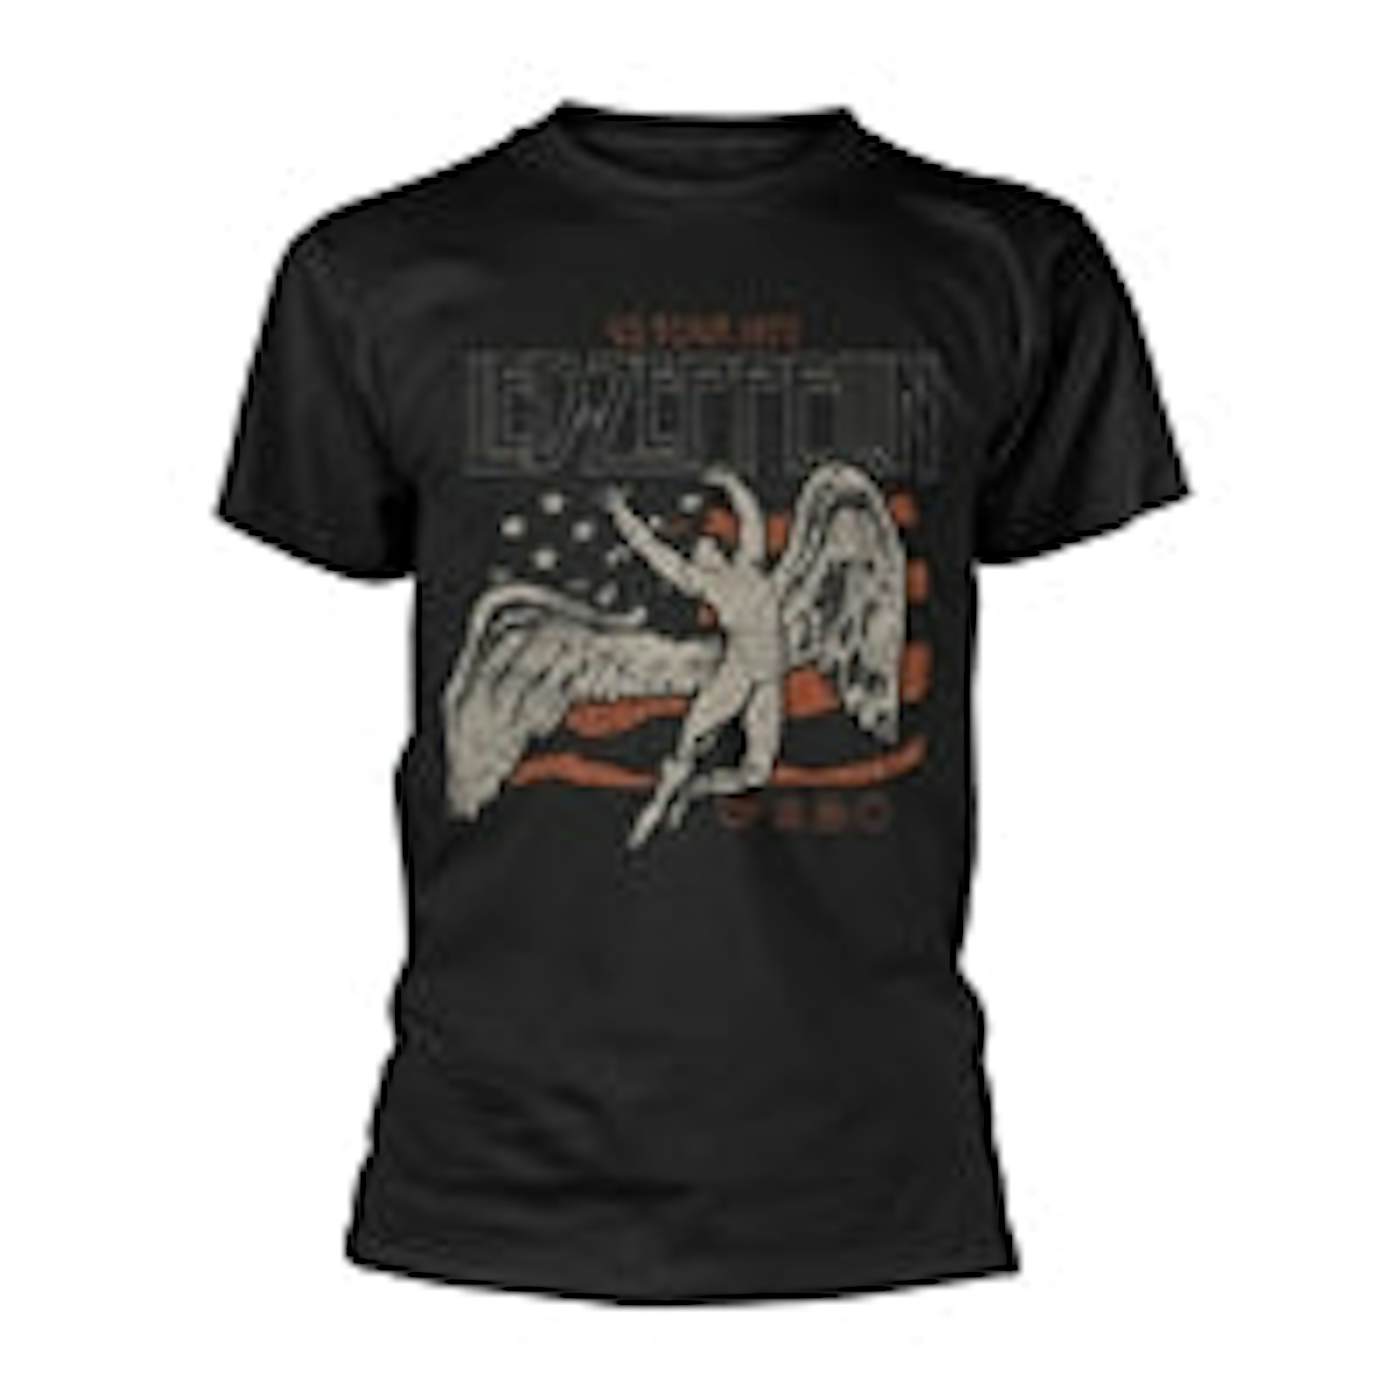 Led Zeppelin T Shirt - USA 1975 Tour Flag